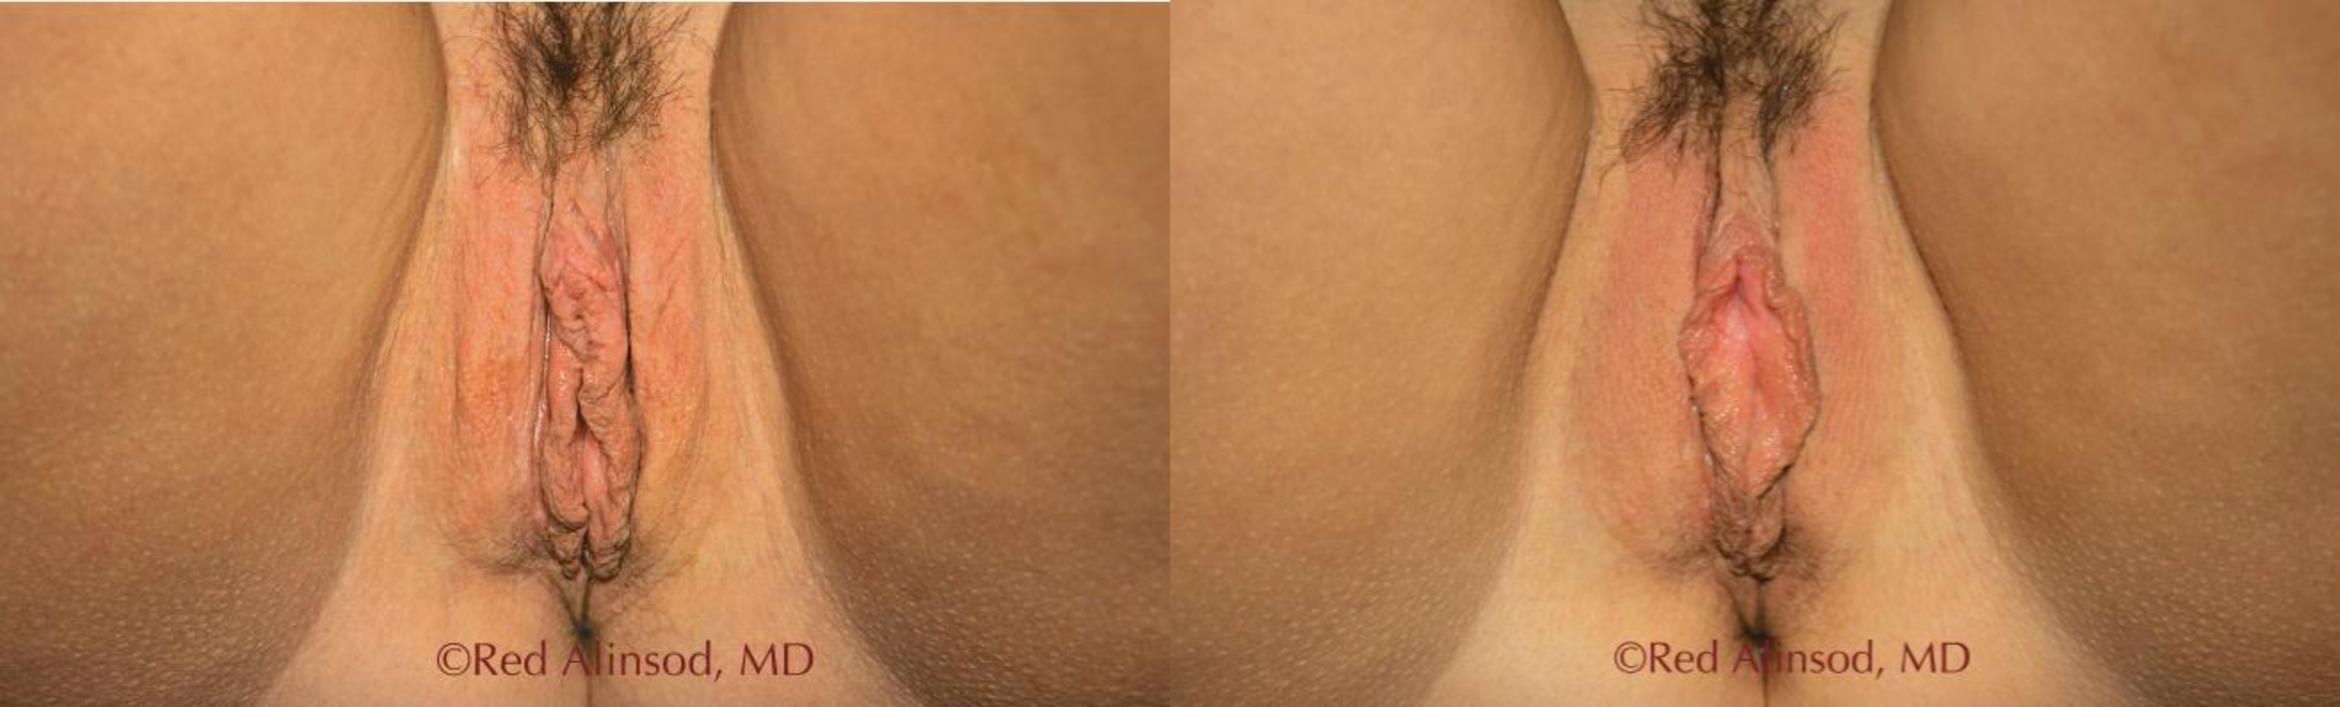 Before & After Vaginal Rejuvenation Case 511 View #1 View in Shreveport, LA